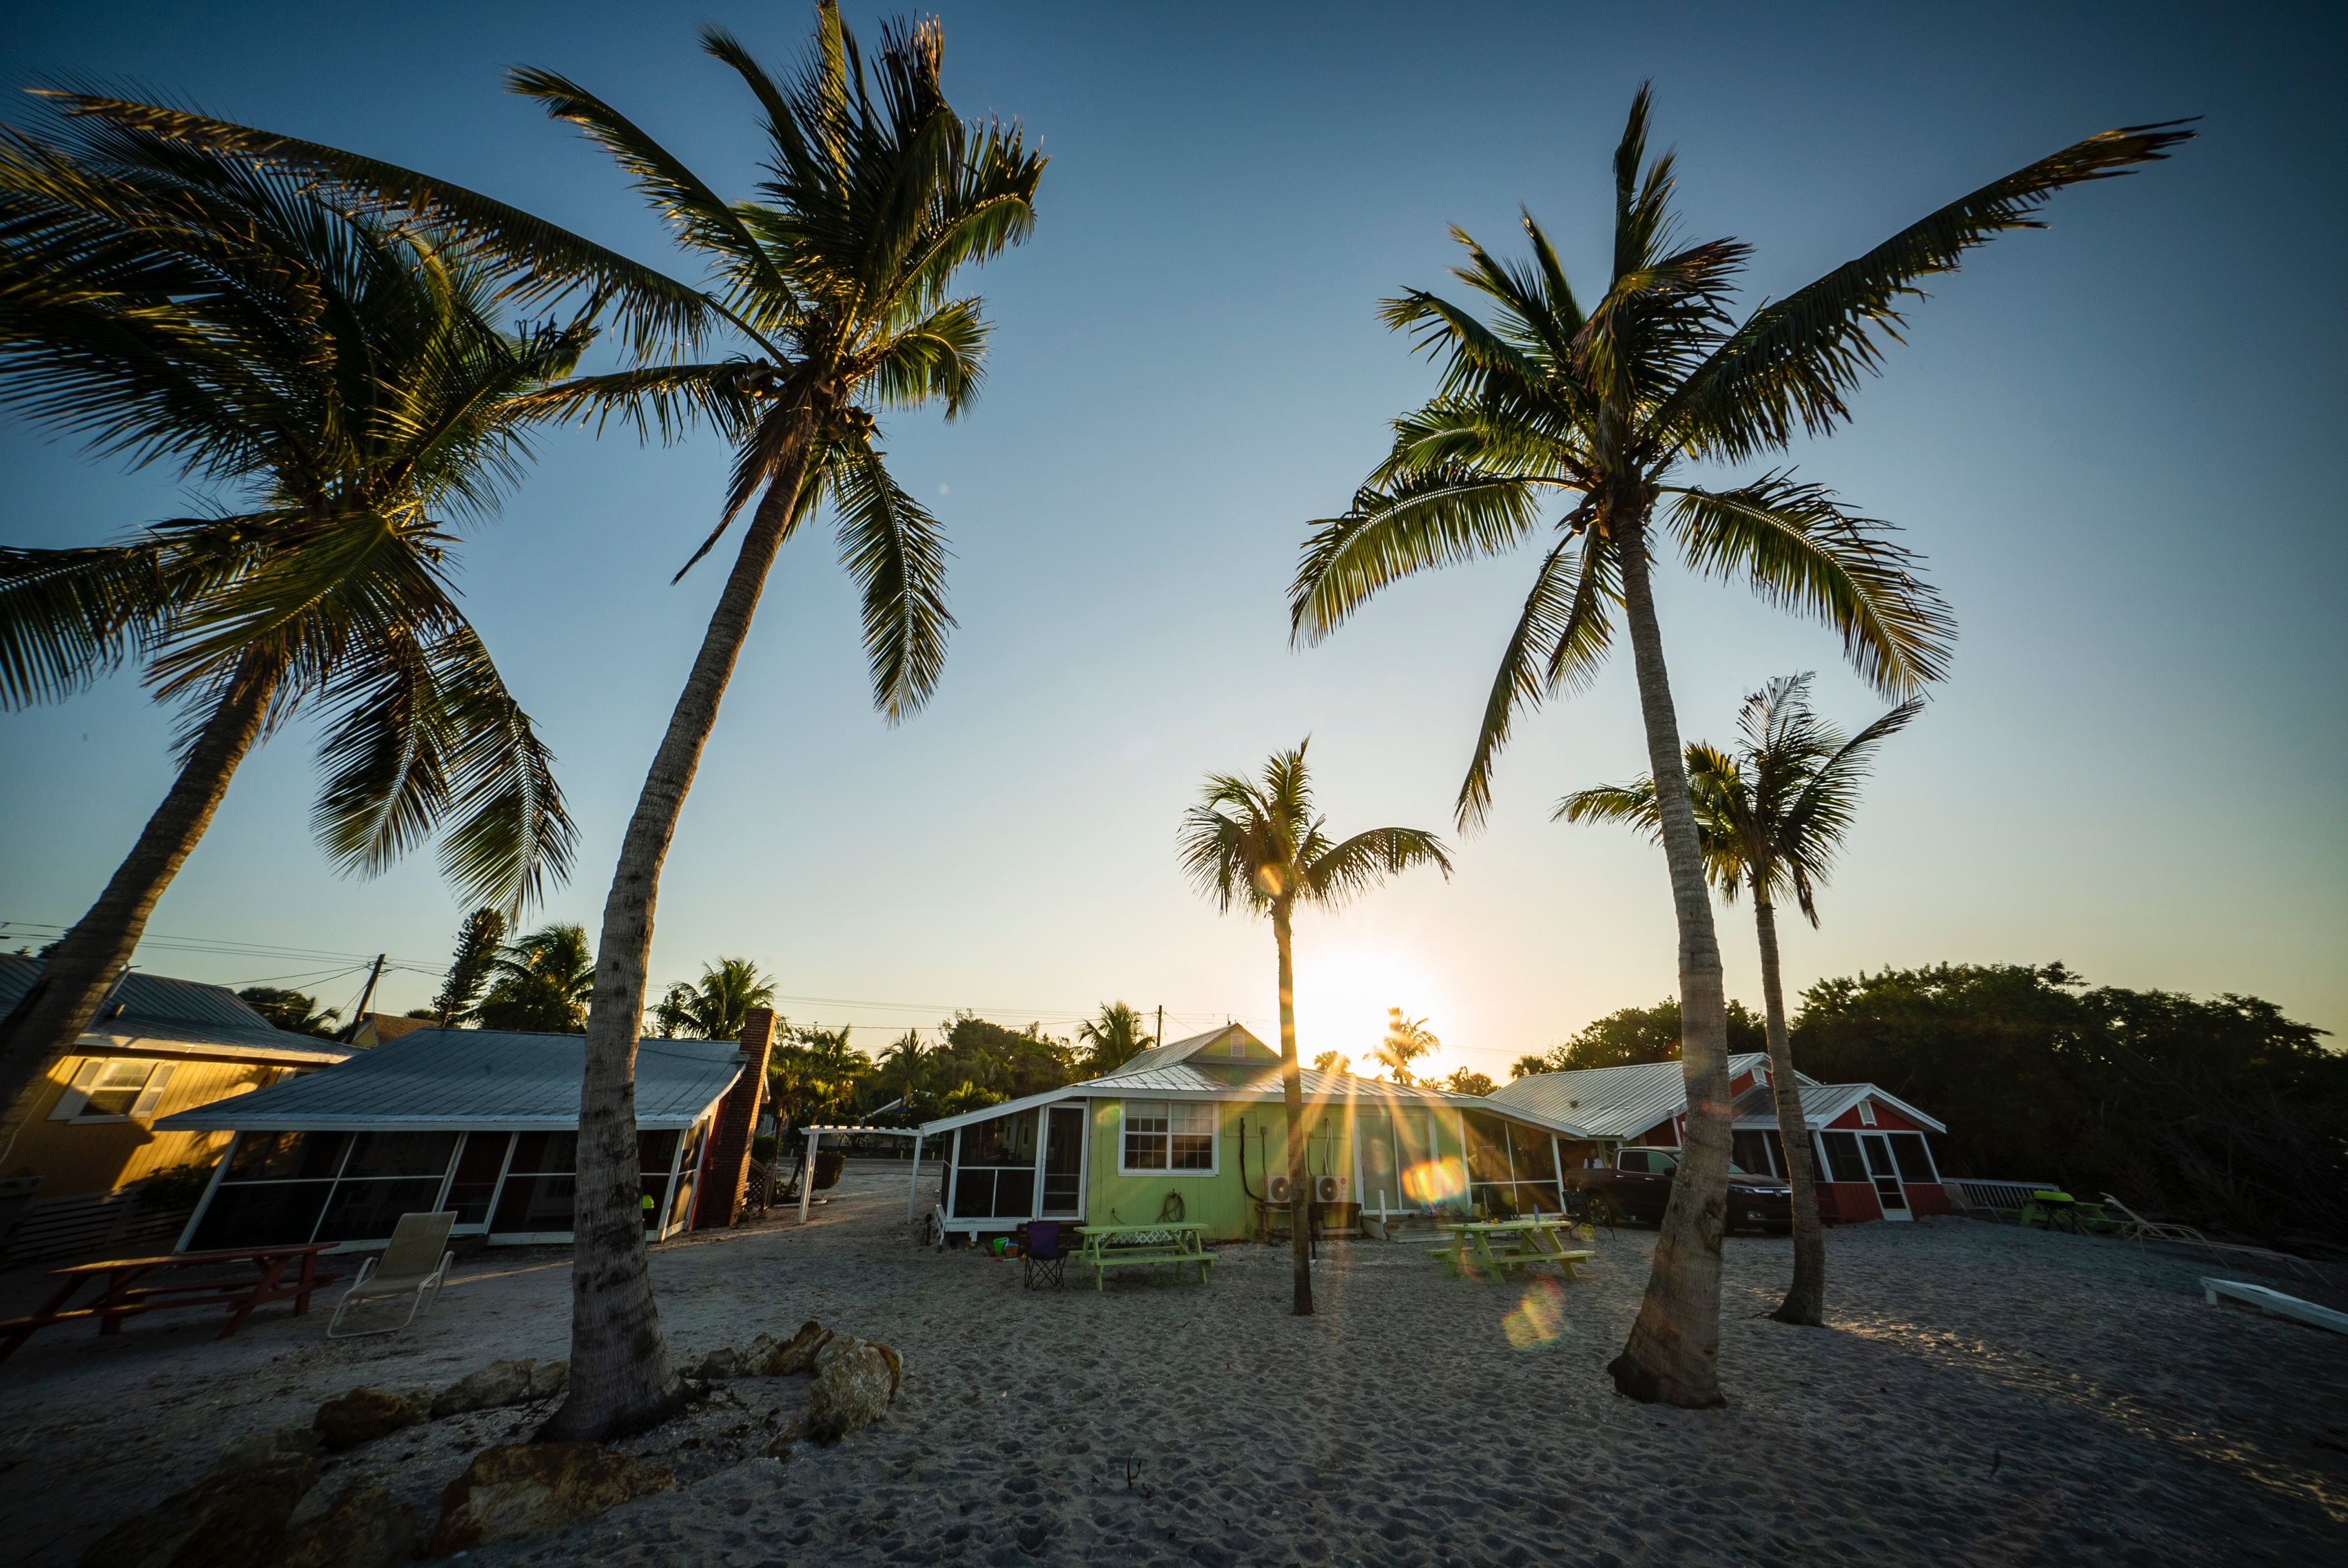 Palm Trees Near White Concrete Building In Sanibel Island, Florida, USA